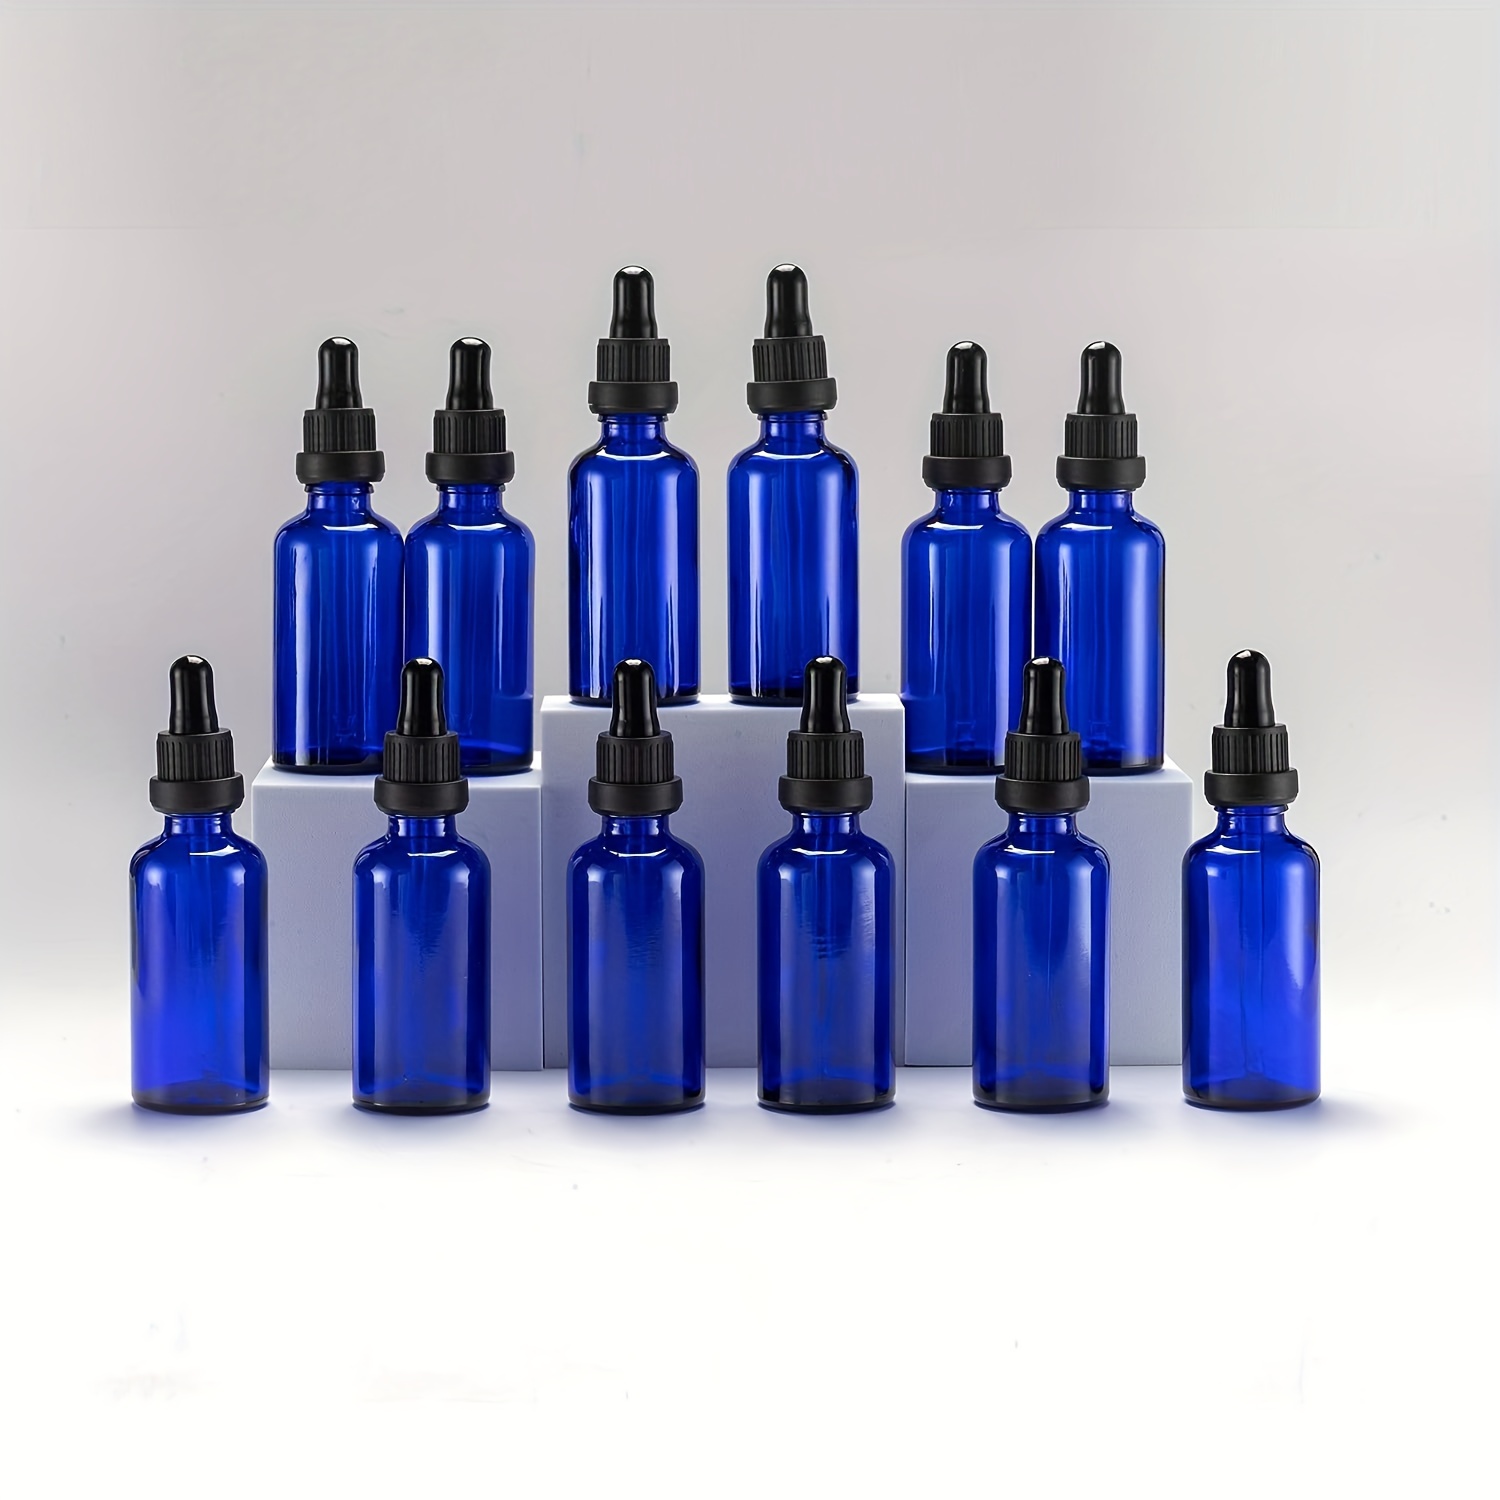 

6pcs/12 Pcs Blue Glass Dropper Bottle 2oz, Tincture Bottles With Glass Dropper, For Essential Oils, Aromatherapy, Cosmetic, Laboratory, Pharmacy, Liquids, Travel